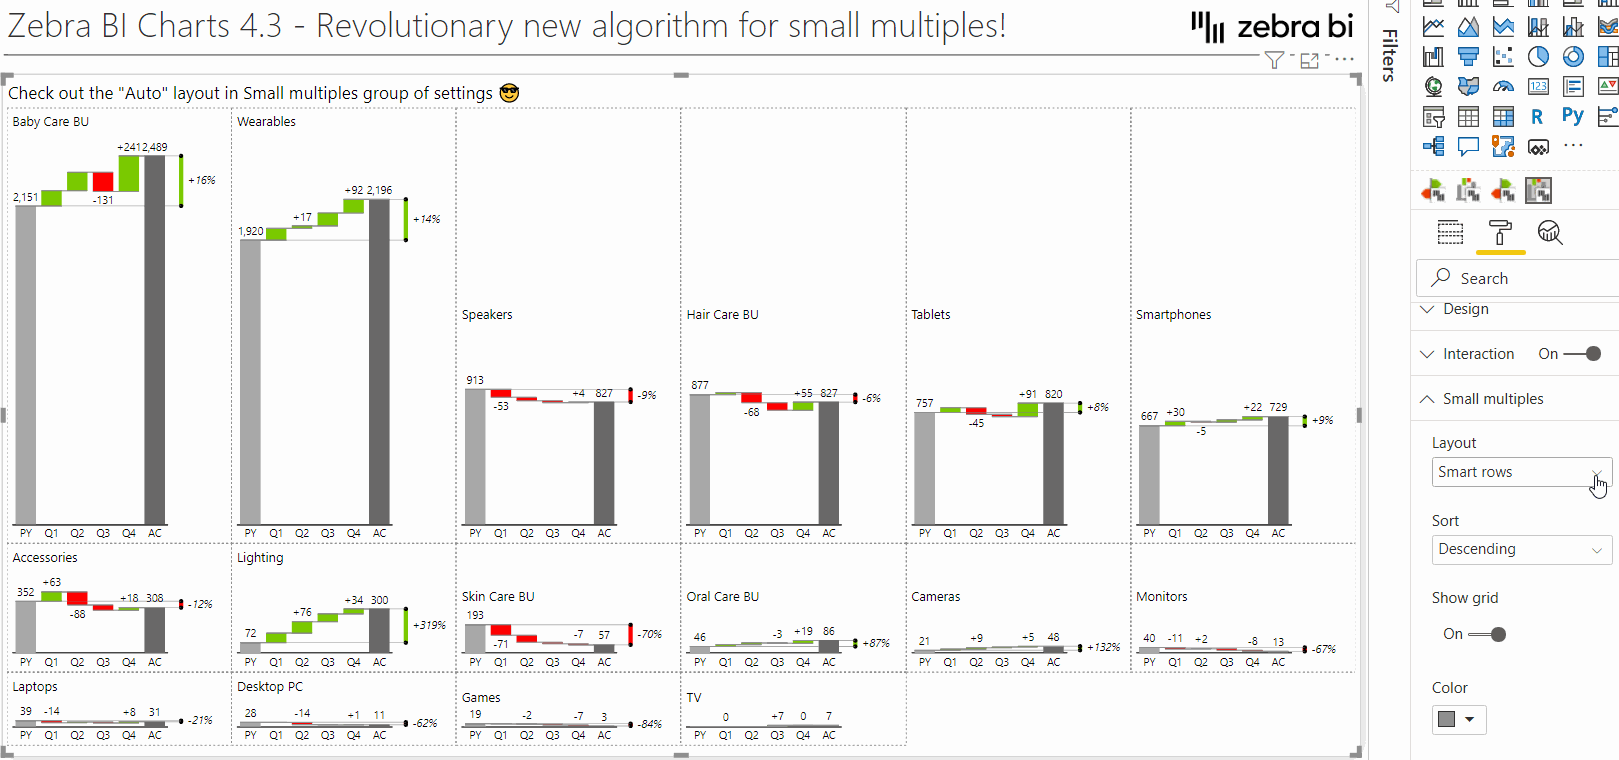 Advanced small multiples in Zebra BI Charts